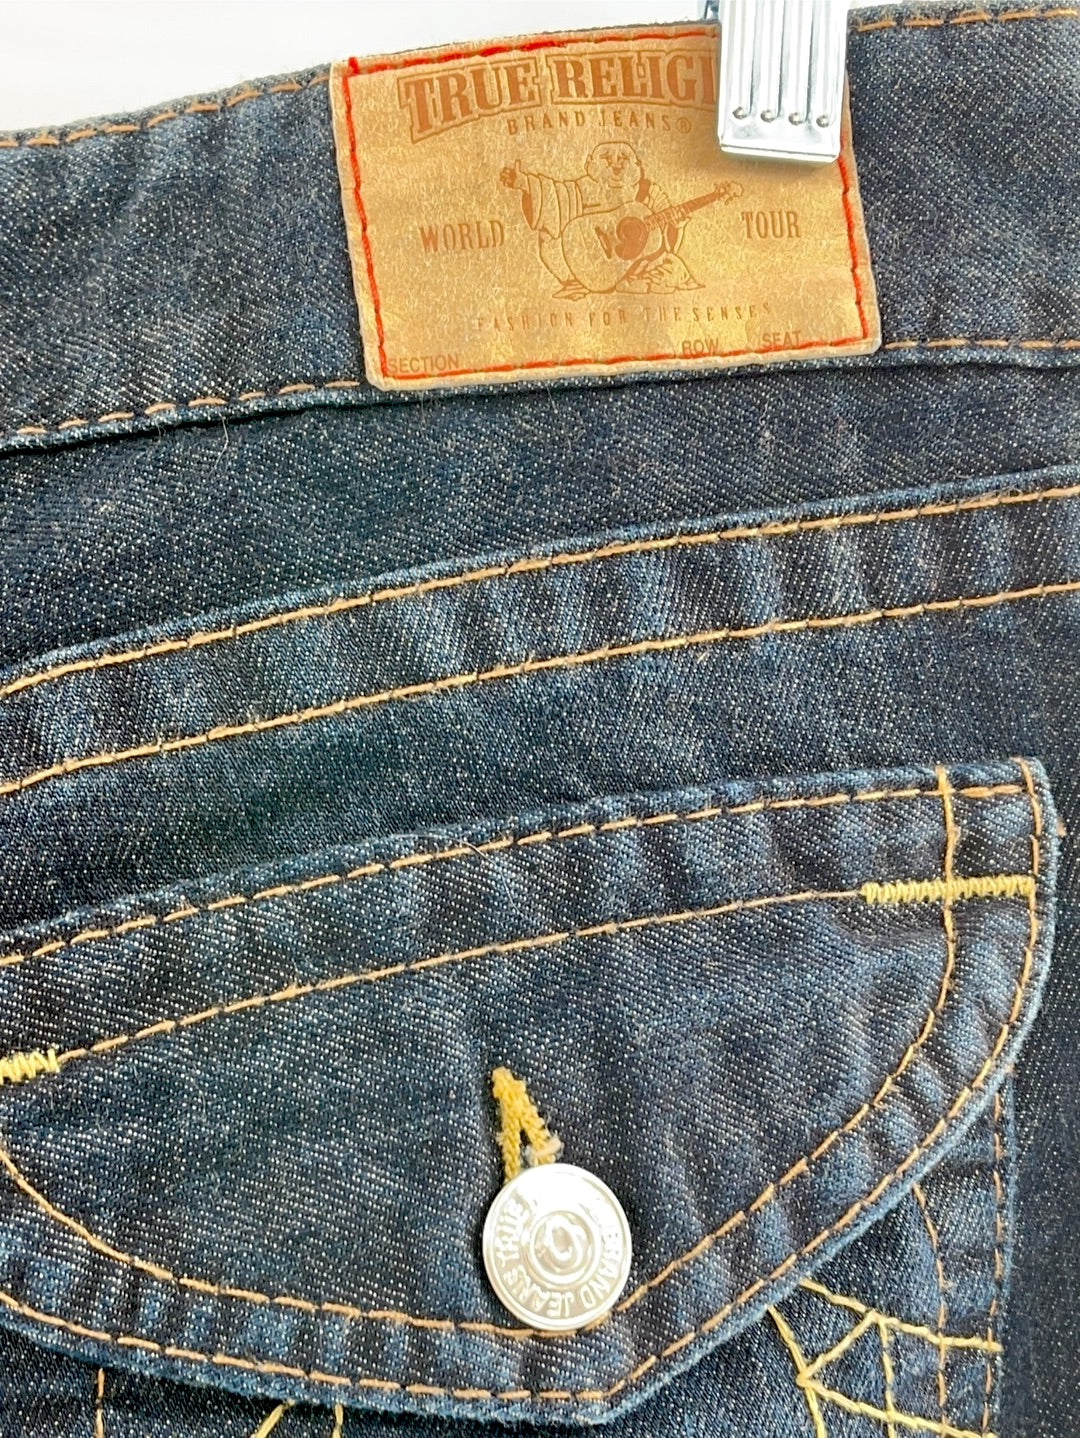 True Religion Low Rise Skinny Jeans (Size 27)